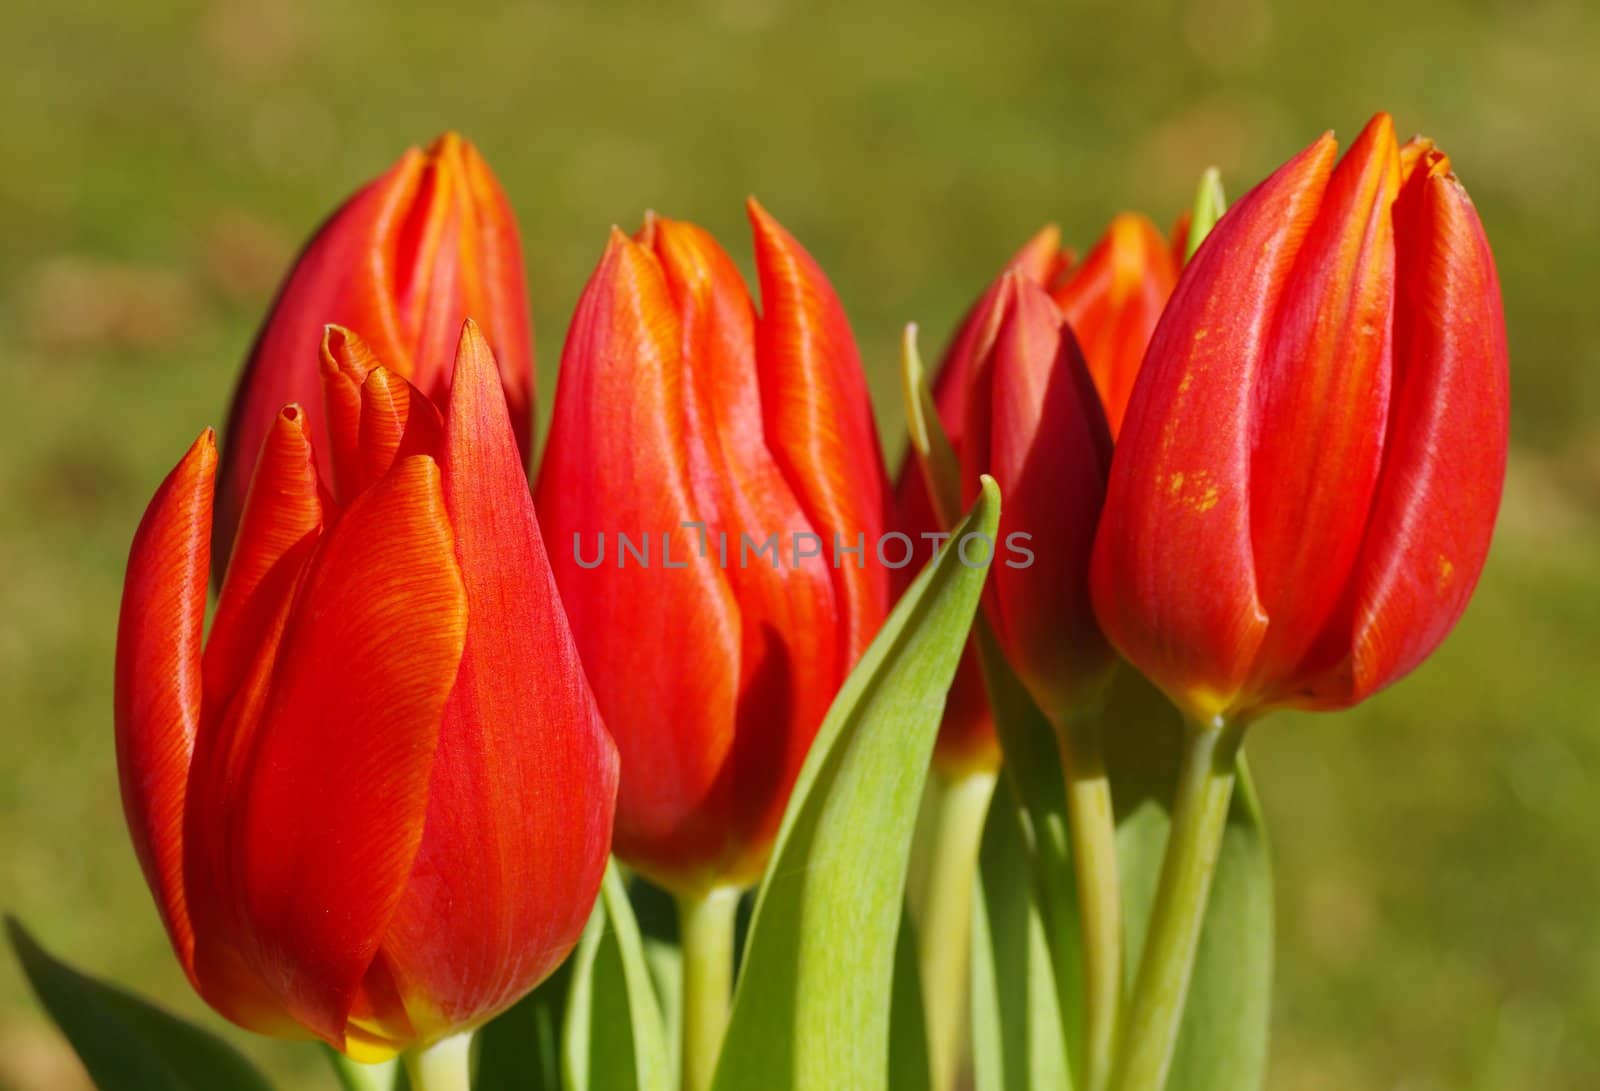 Tulips by FotoFrank